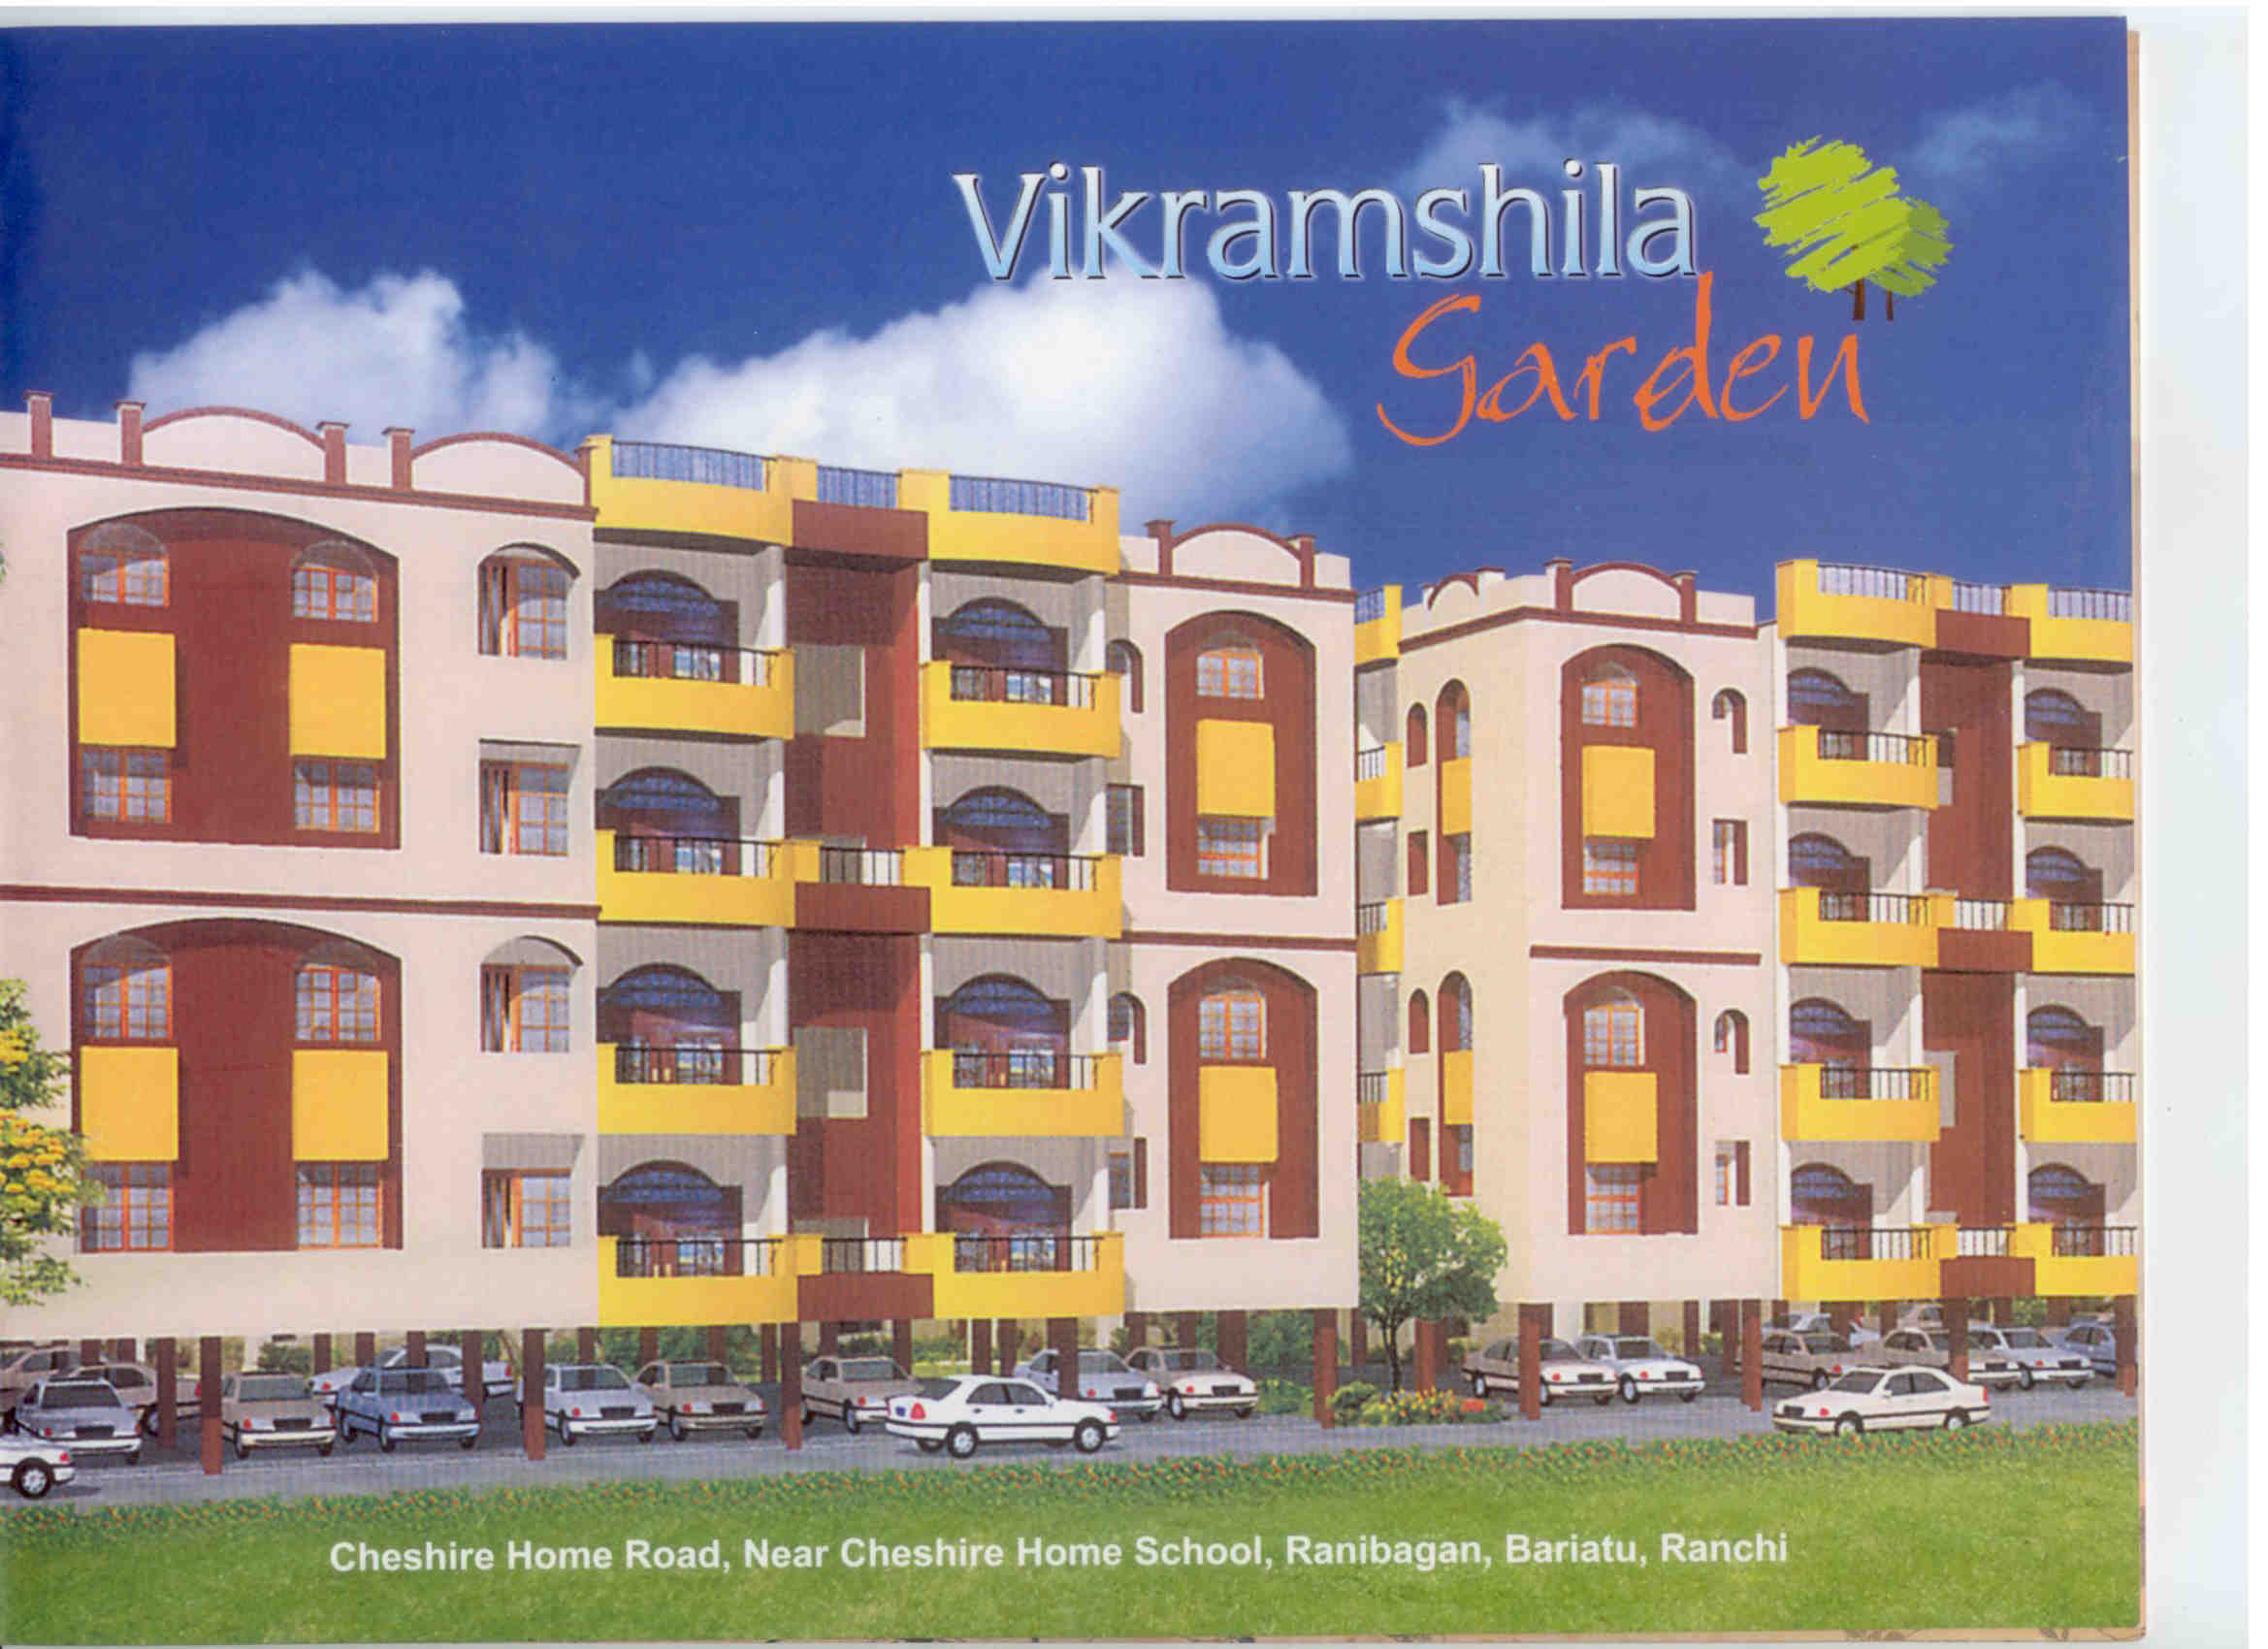 Vikramsila Garden/Chesire home Road